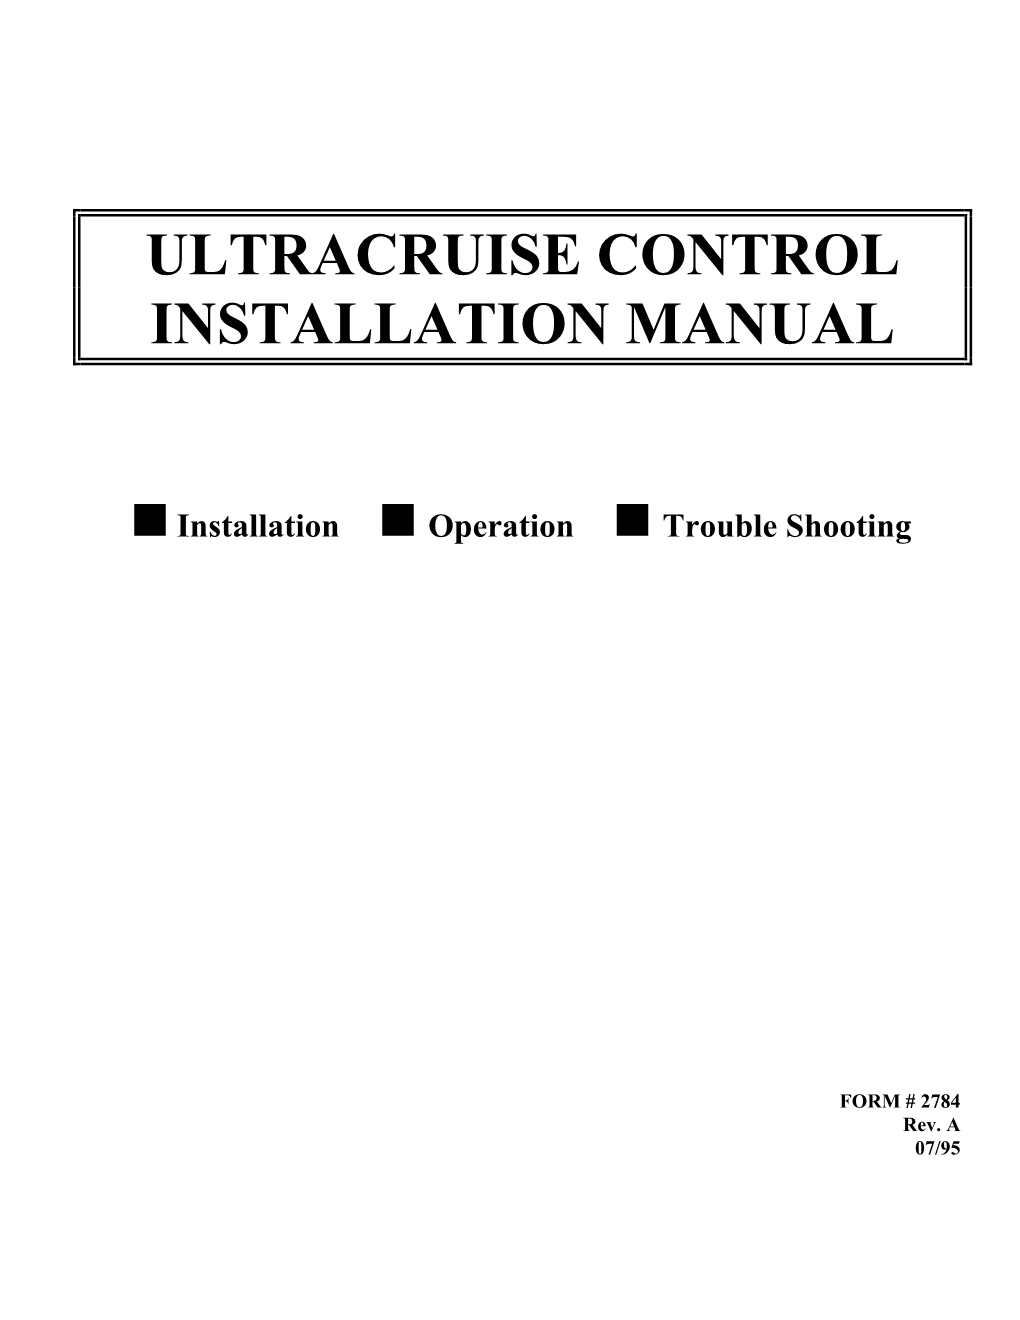 Ultracruise Control Installation Manual